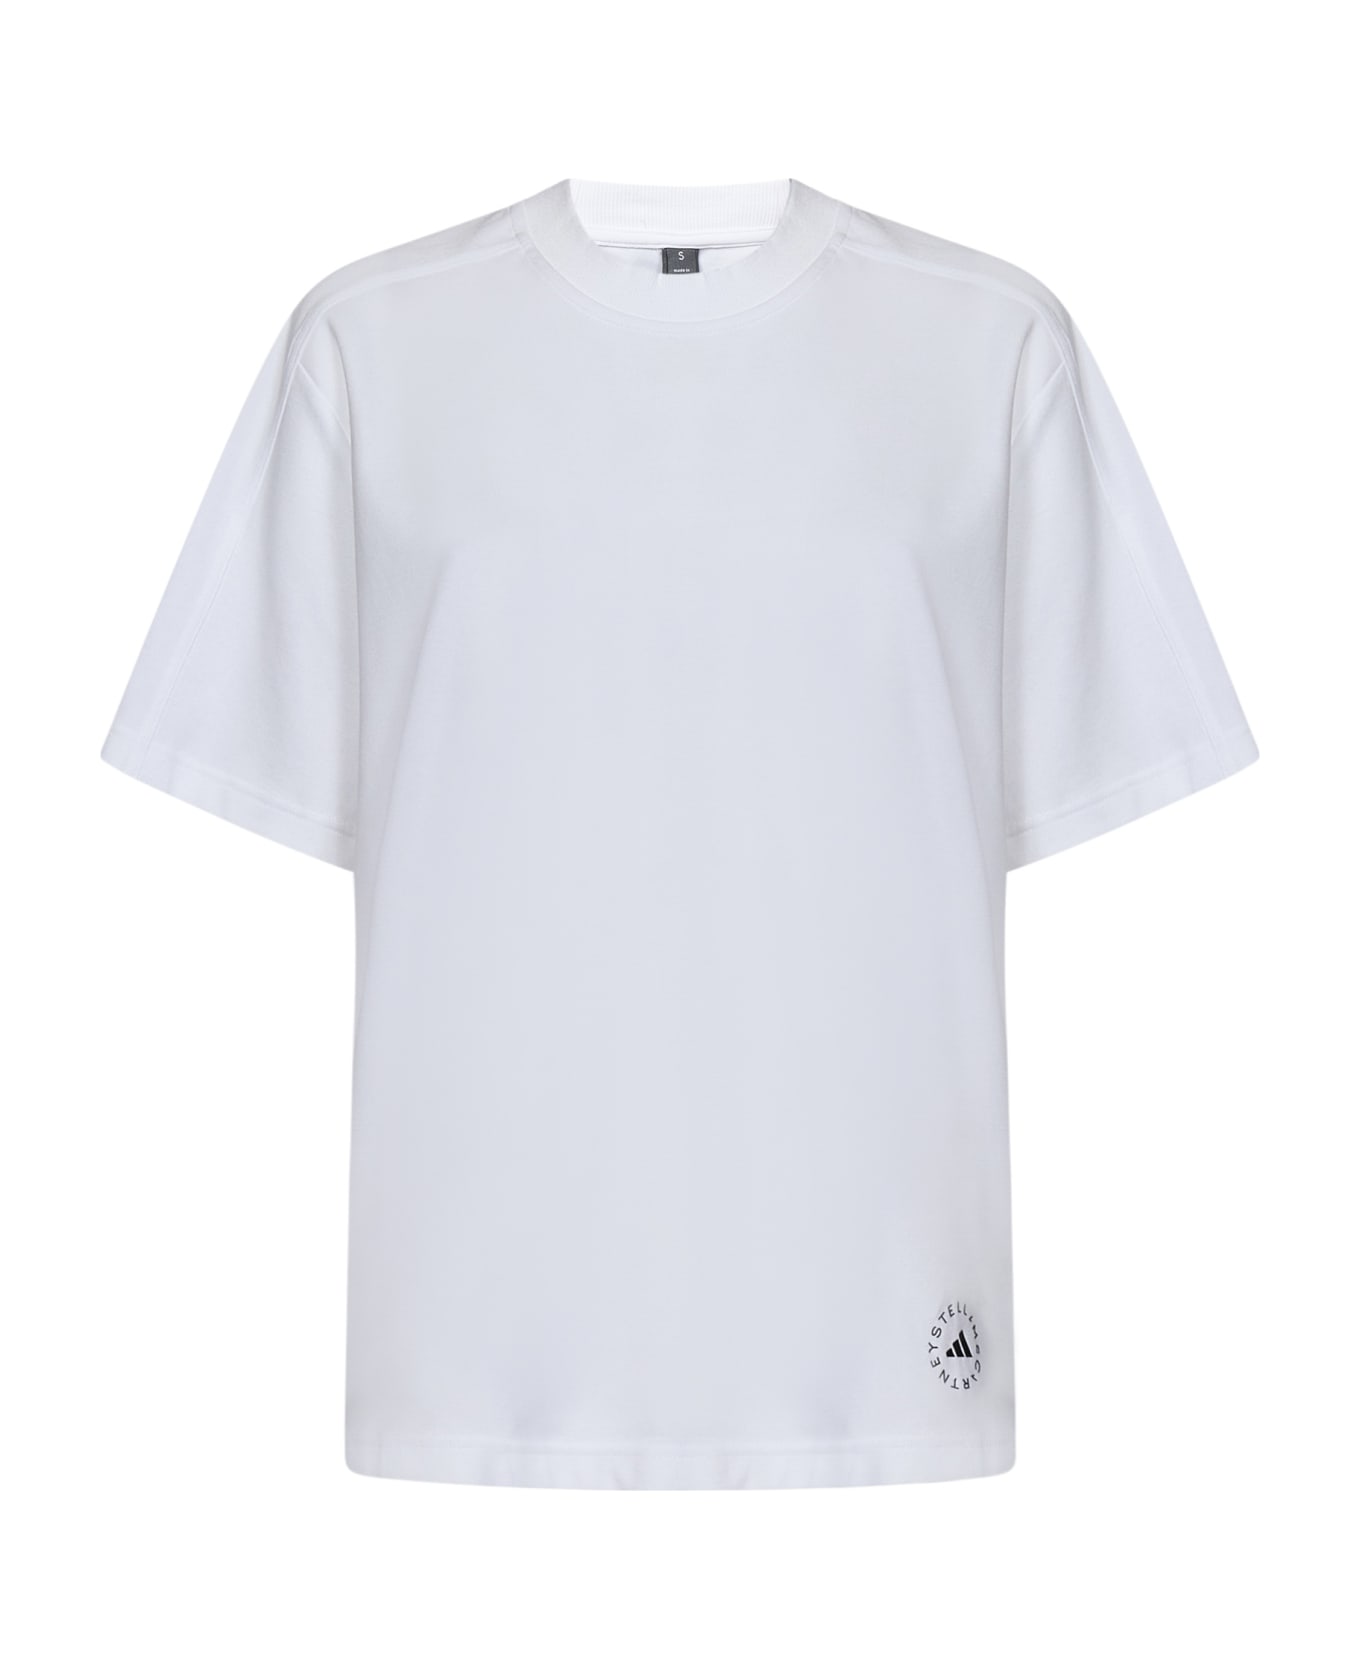 Adidas by Stella McCartney By Stella Mccartney T-shirt - White Tシャツ